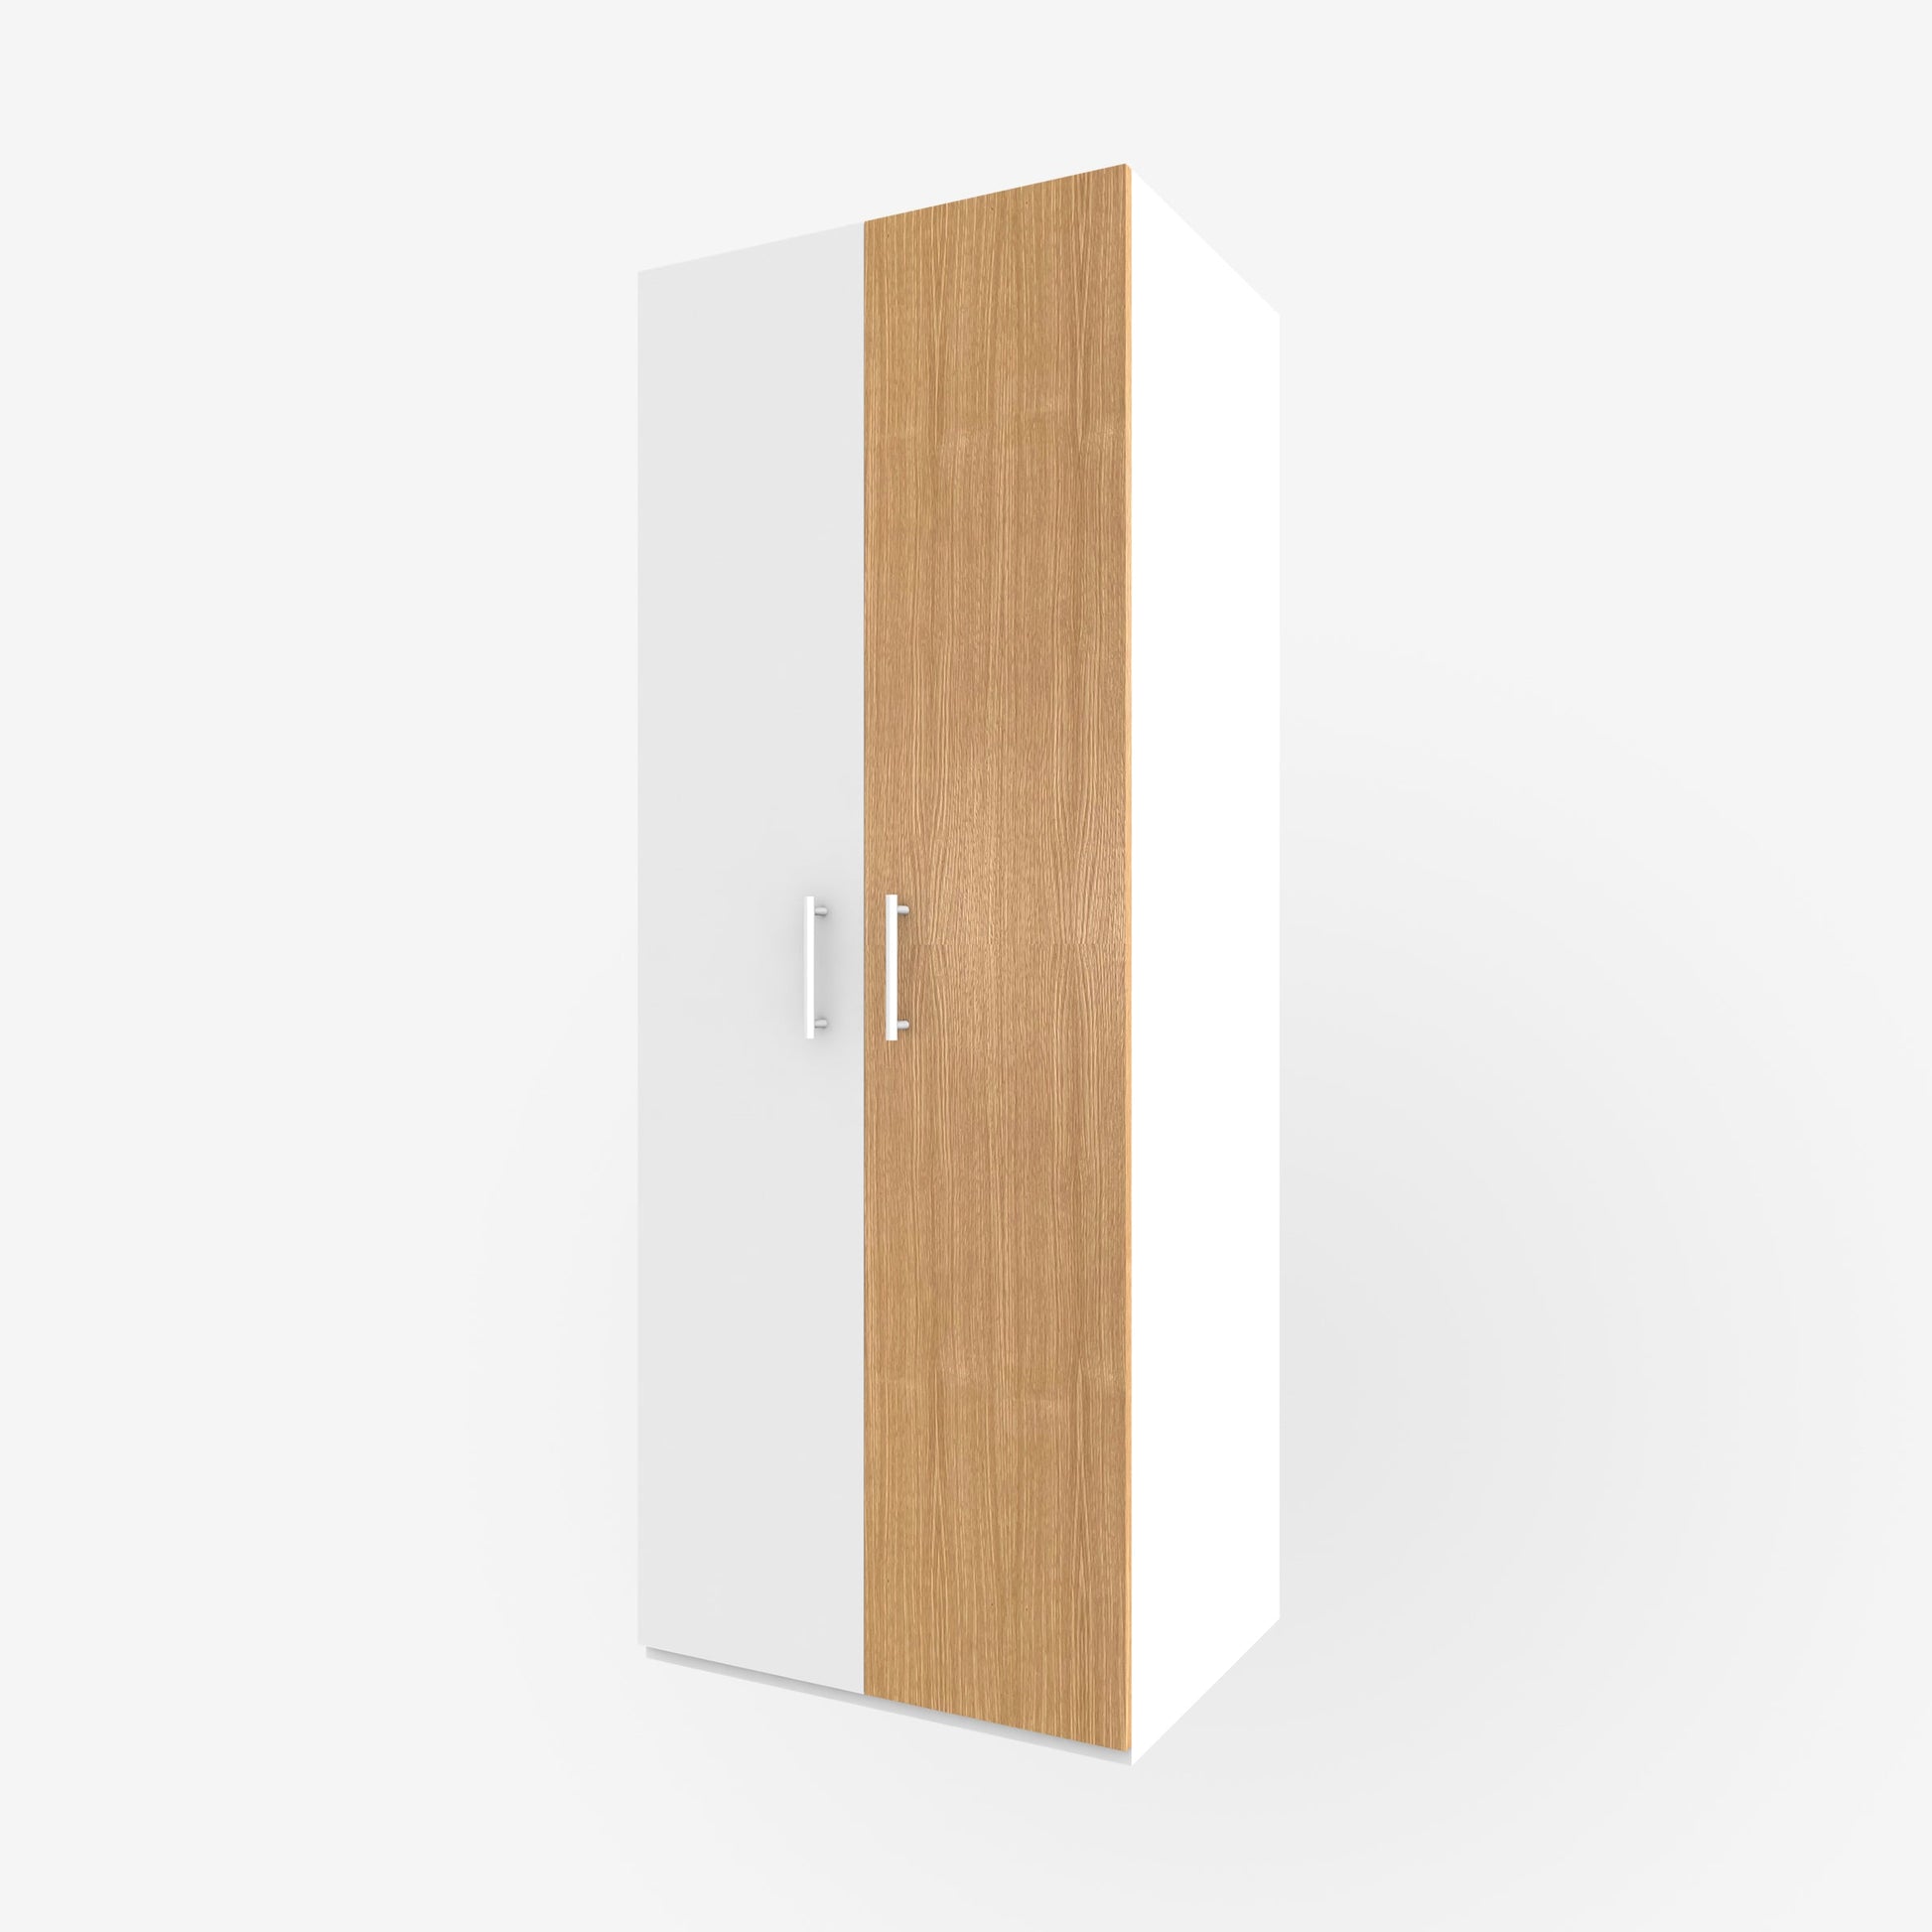 15" x 79" real wood veneer white oak slab door for Ikea or Swedeboxx pax closet cabinet